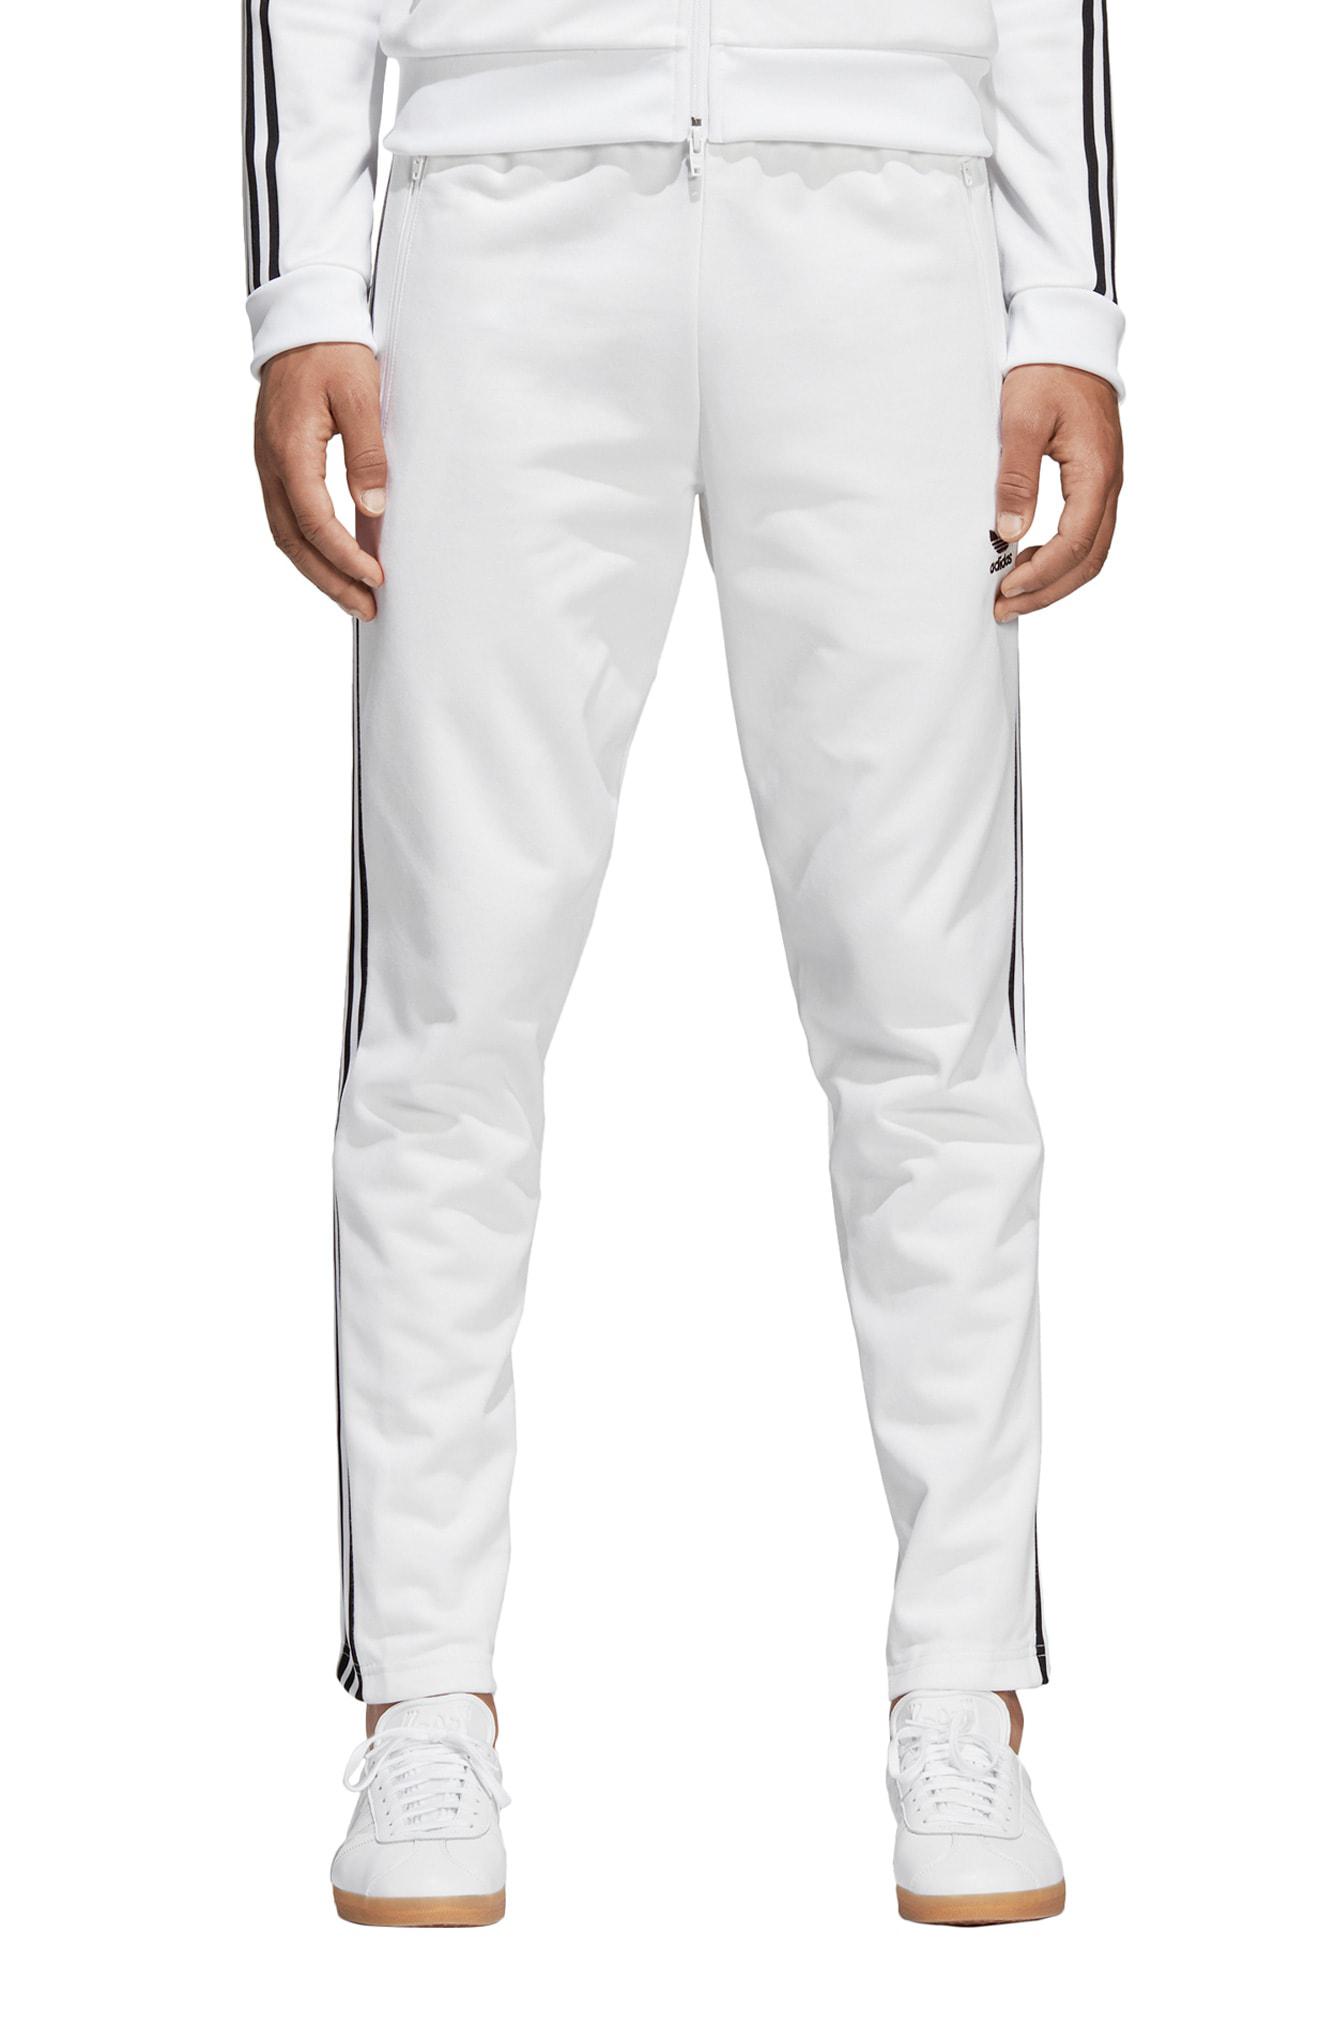 adidas beckenbauer track pants white